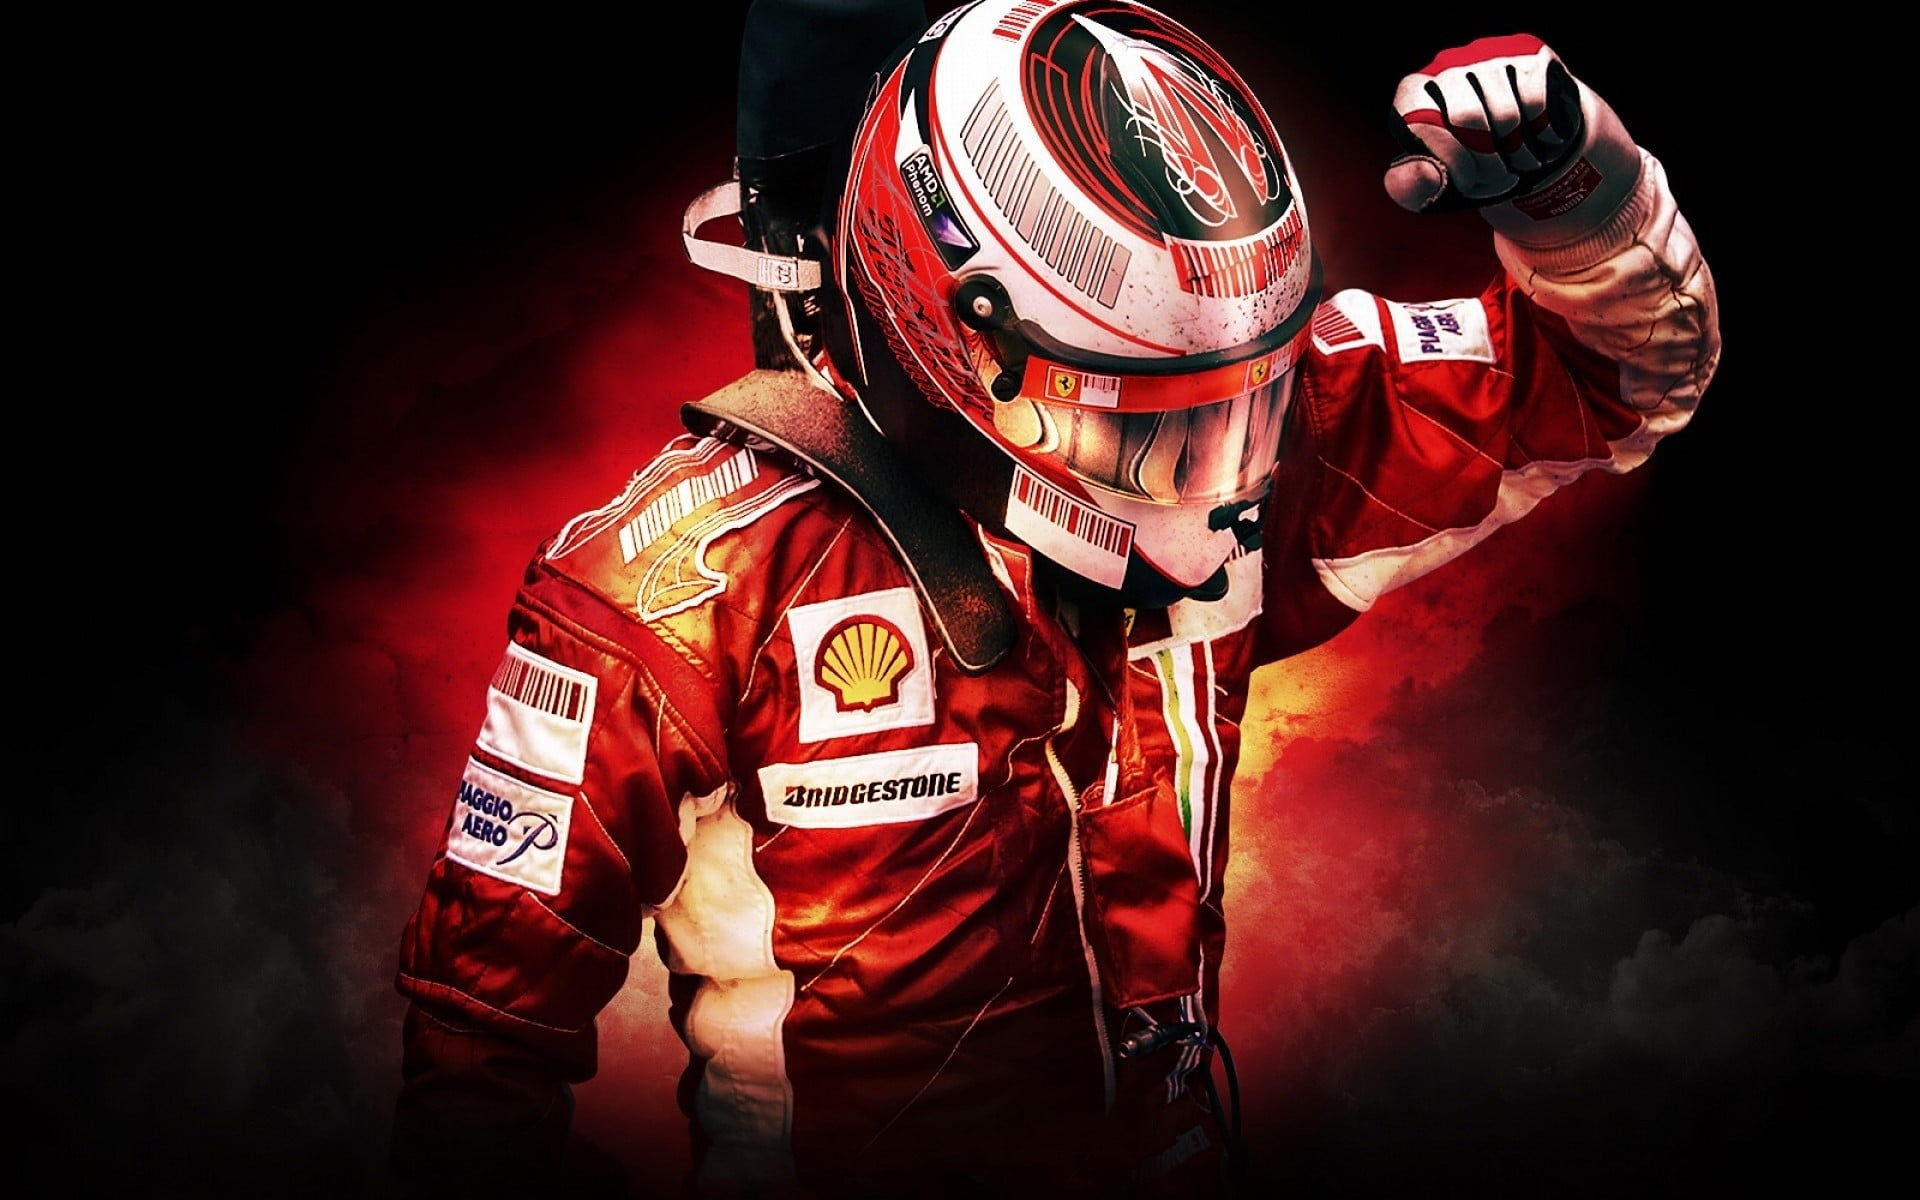 man wearing red and white racing jacket and helmet, Formula 1, Ferrari, men, red